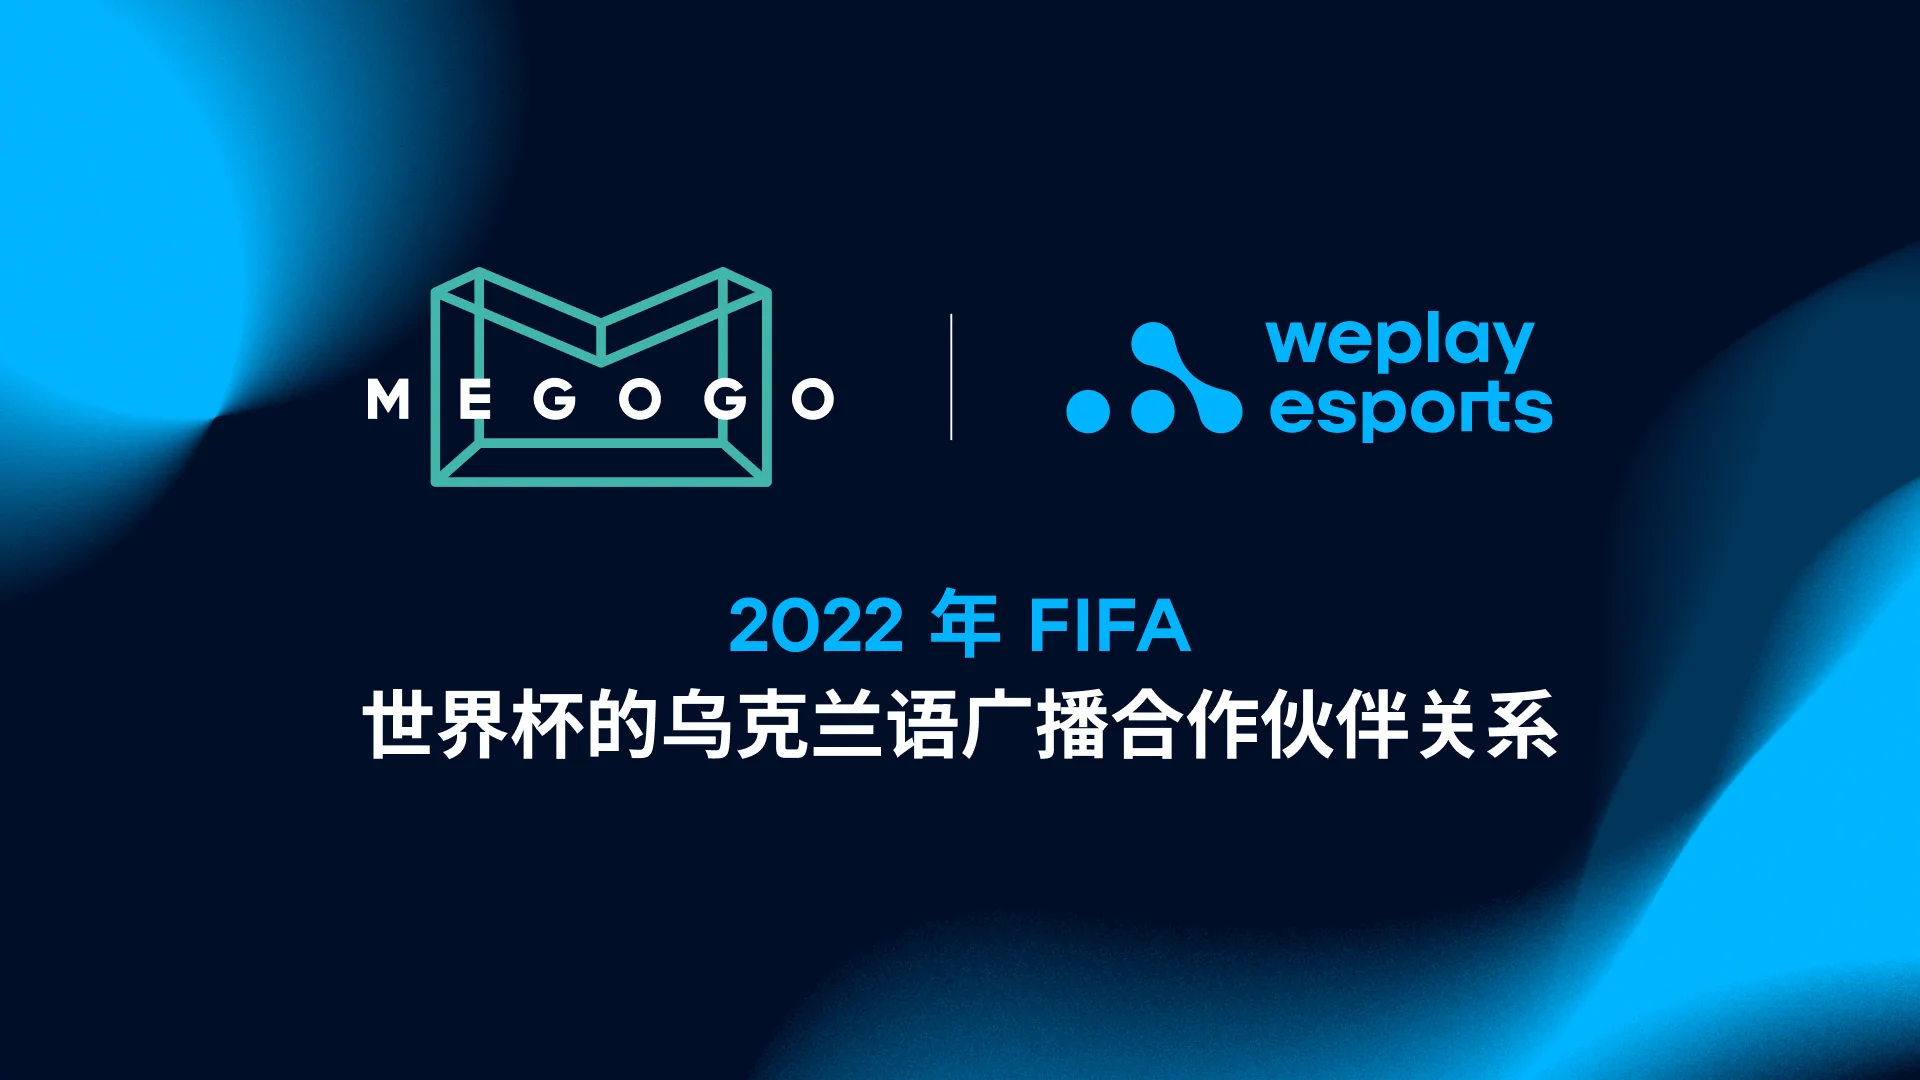 WePlay Esports 成为 2022 年世界杯足球赛乌克兰语转播的官方制作合作伙伴。图像：WePlay Holding